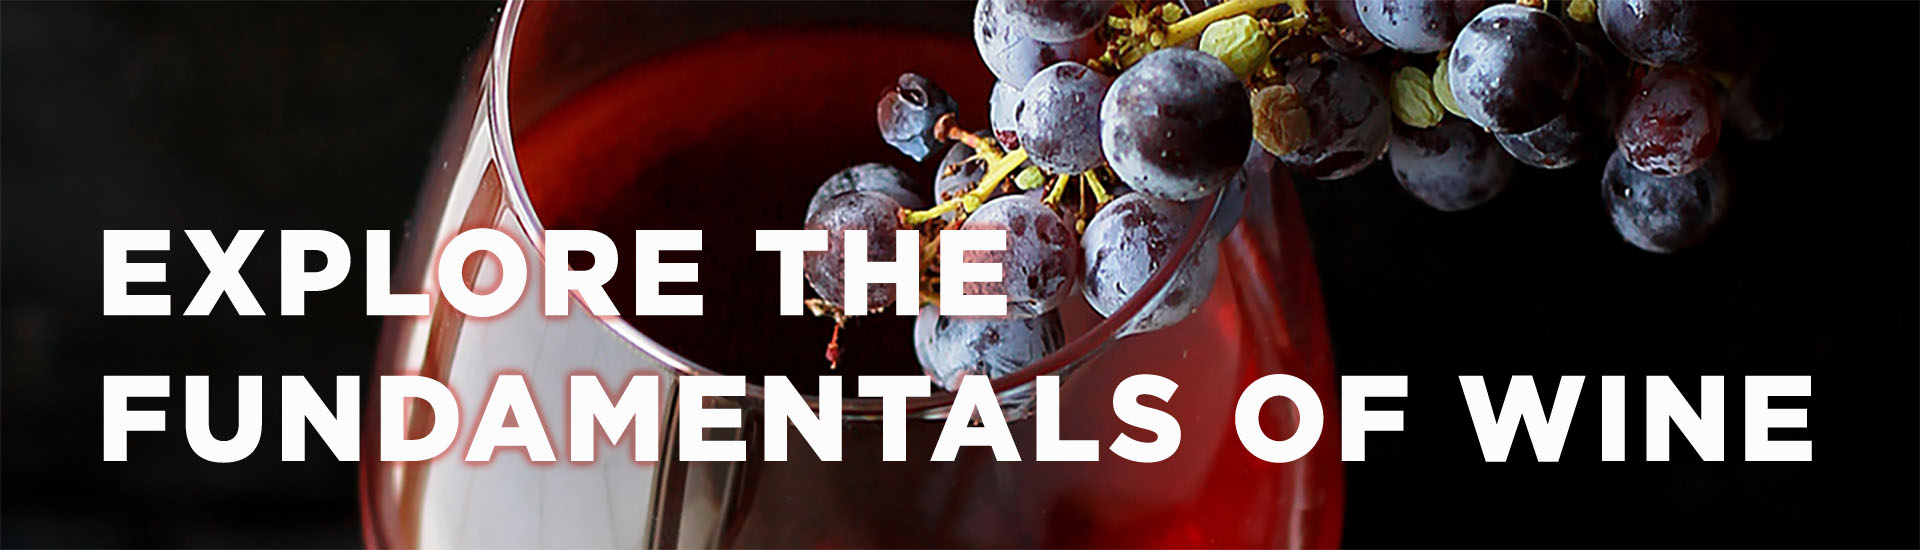 Explore the Fundamentals of Wine